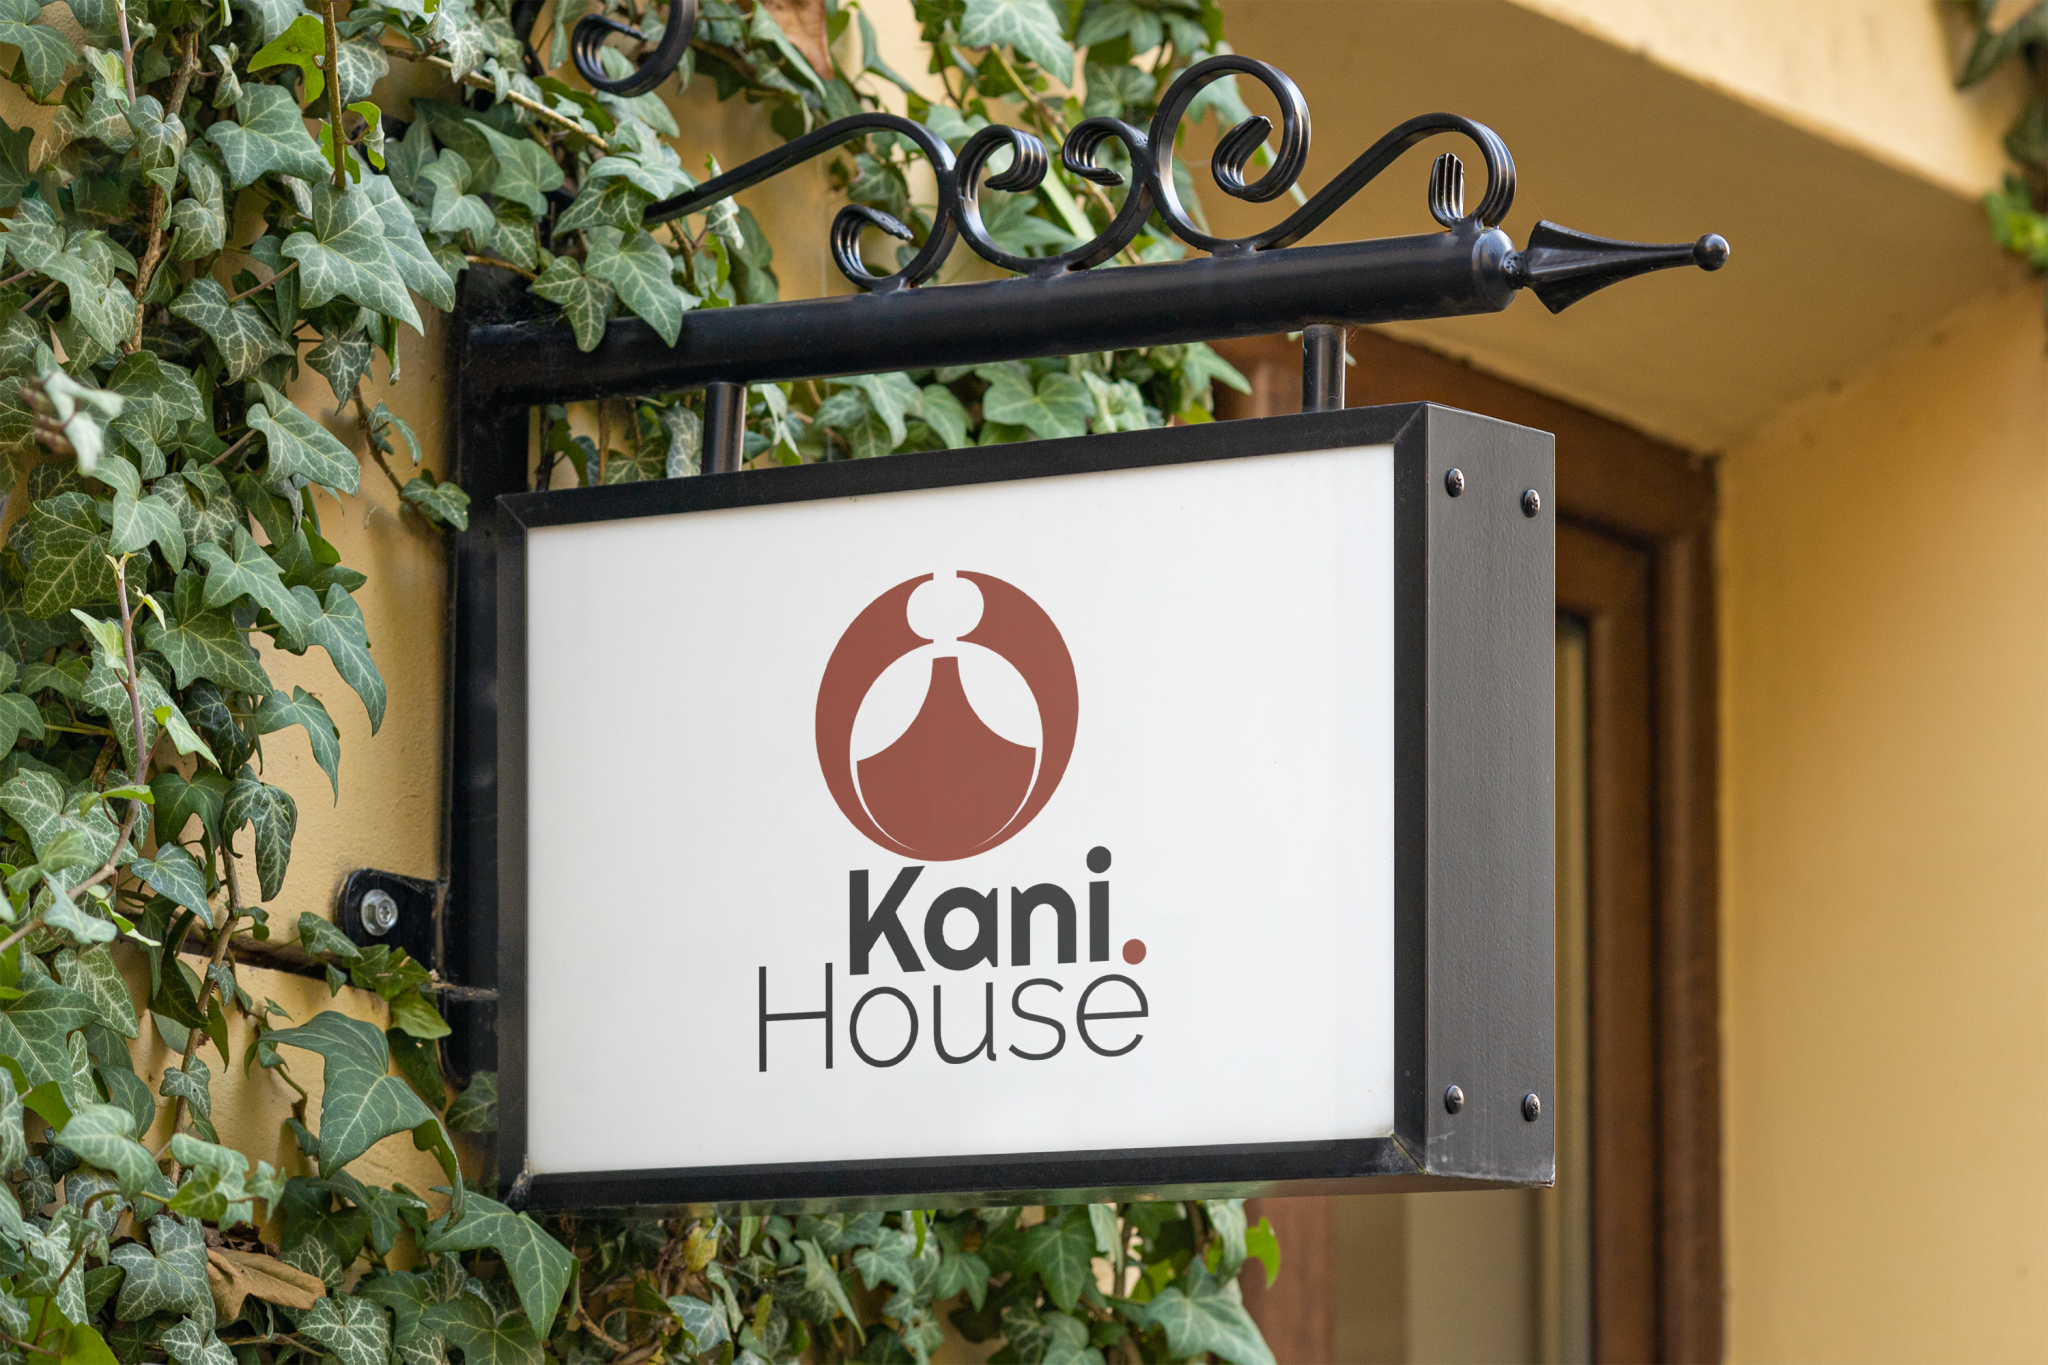 Kani House